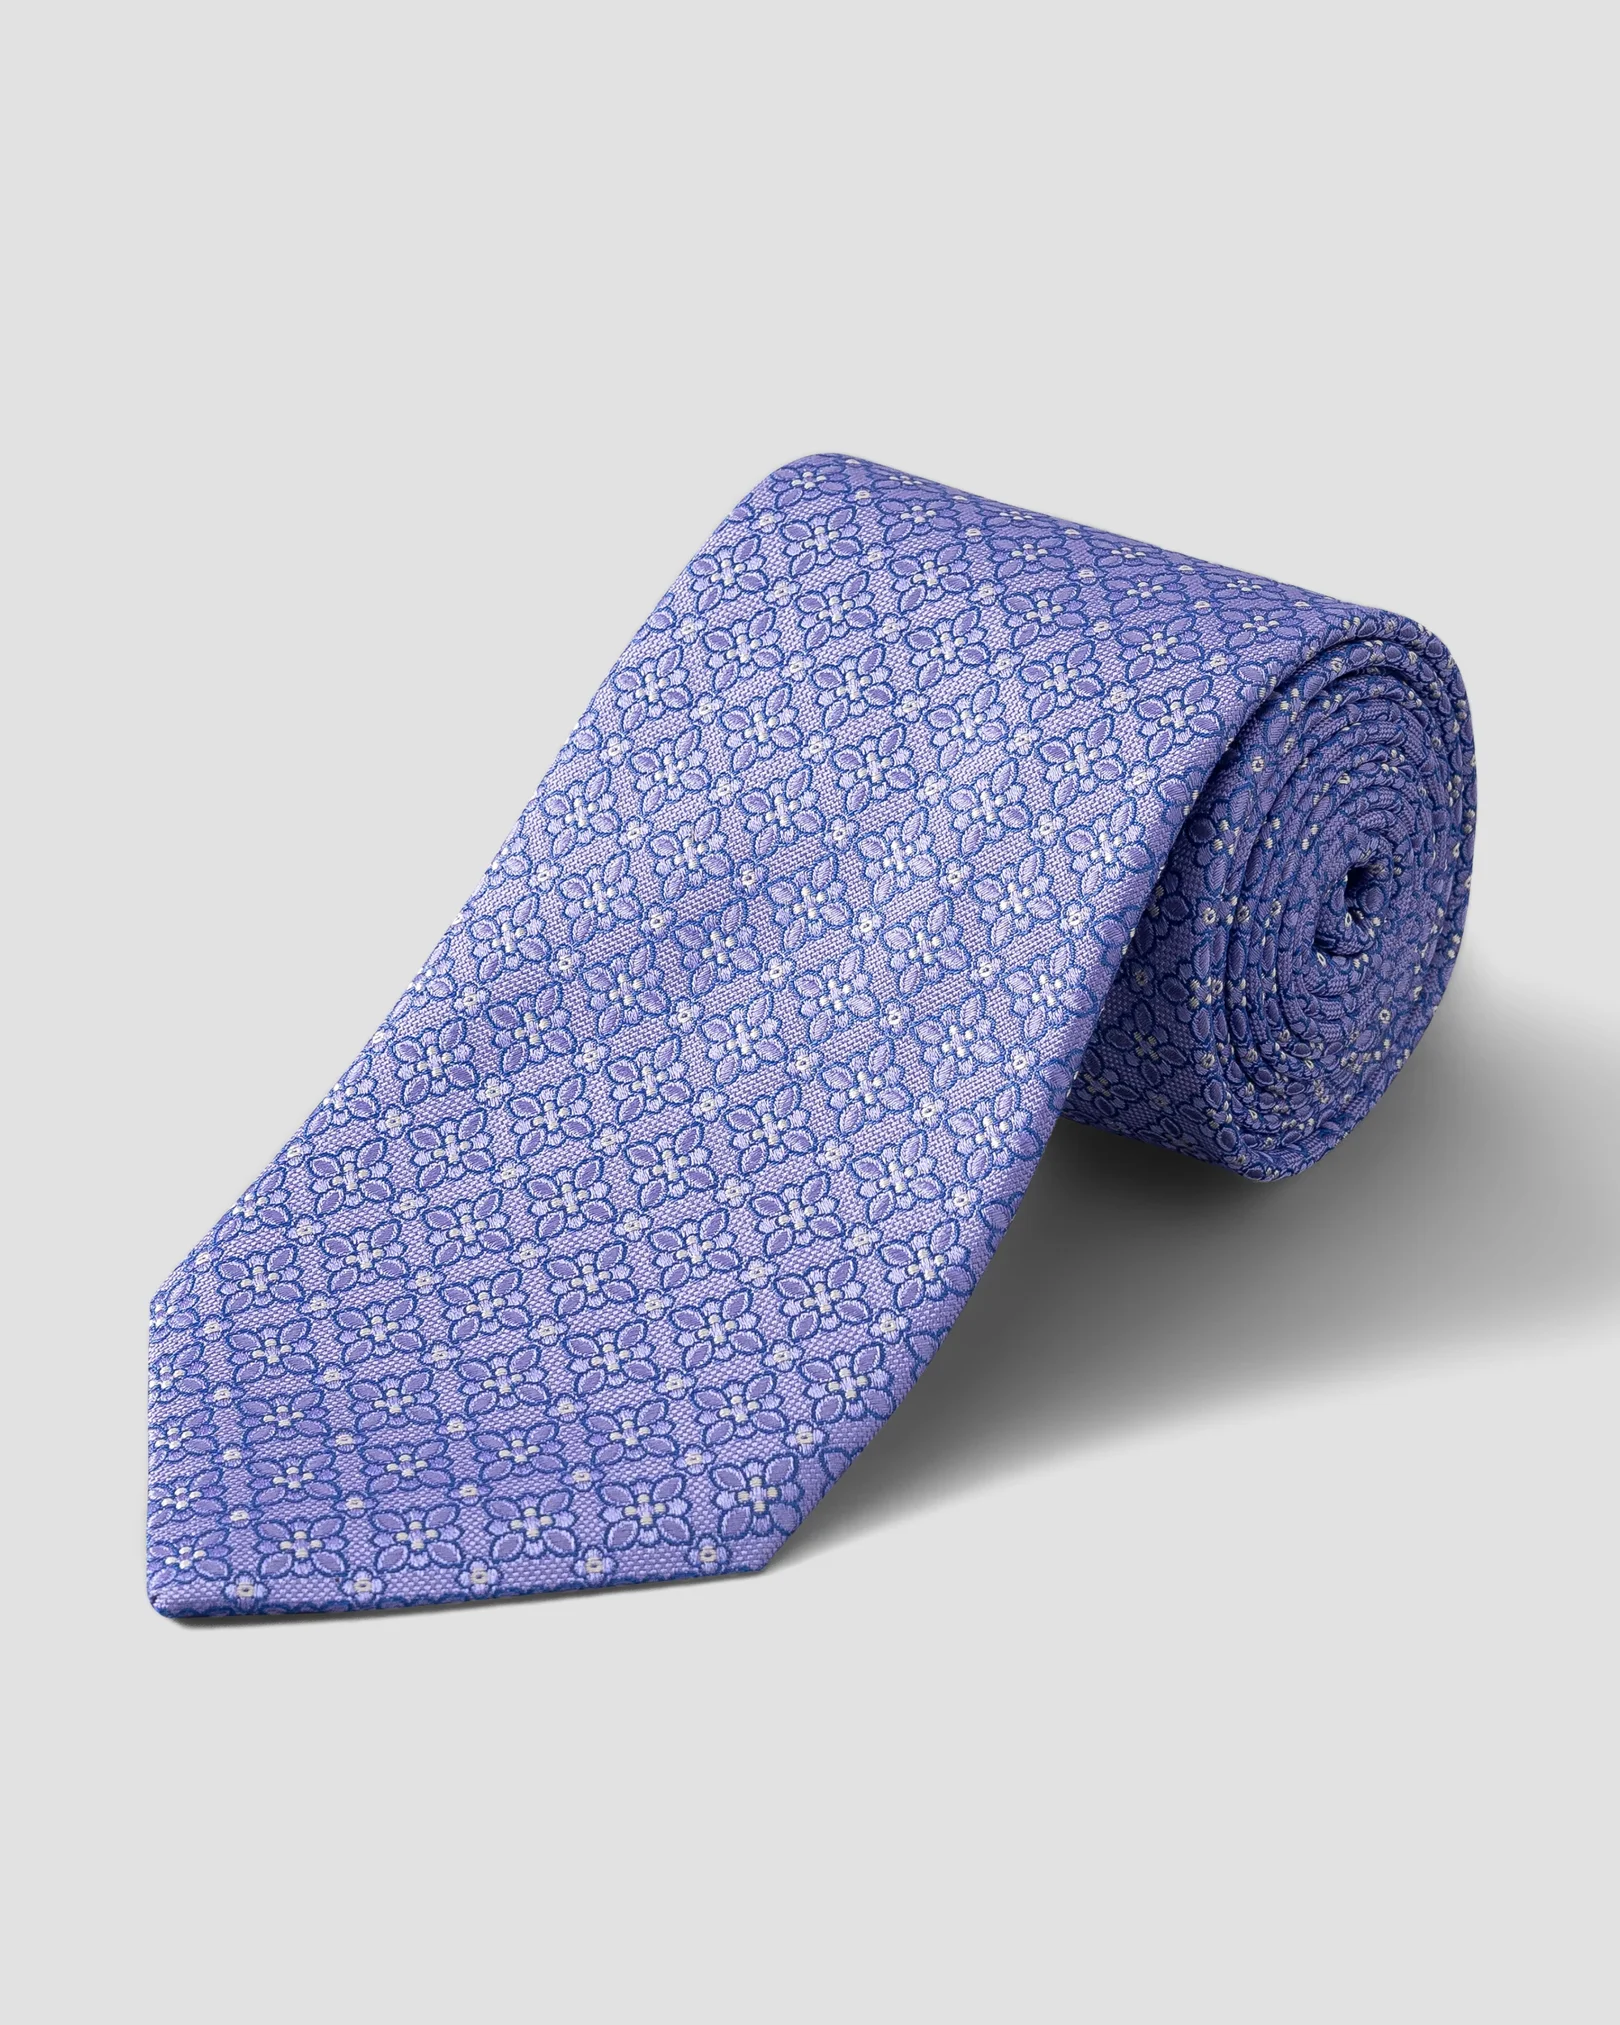 Purple Floral Silk Tie